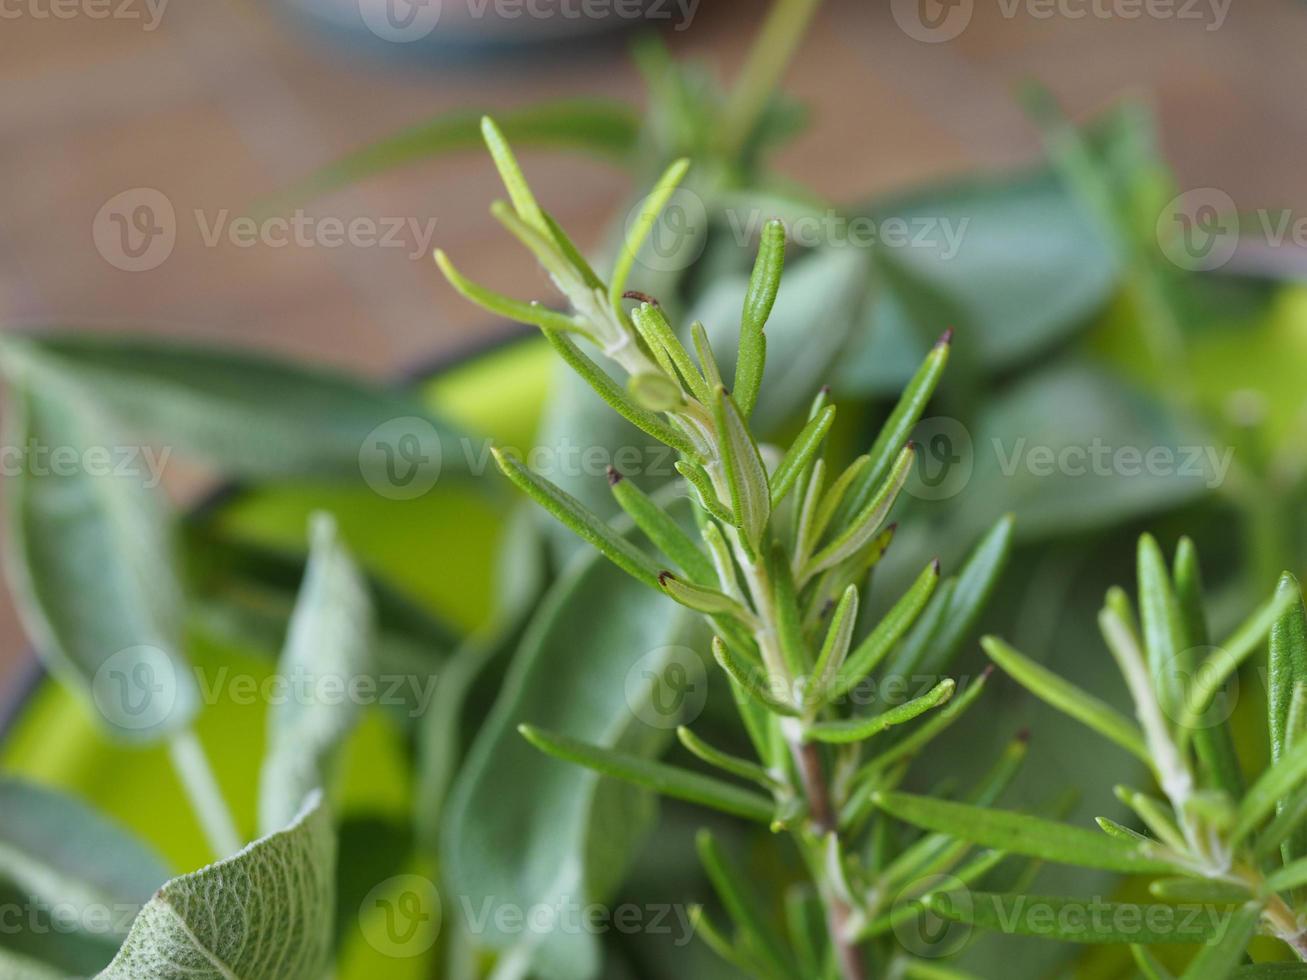 rozemarijn plant close-up foto